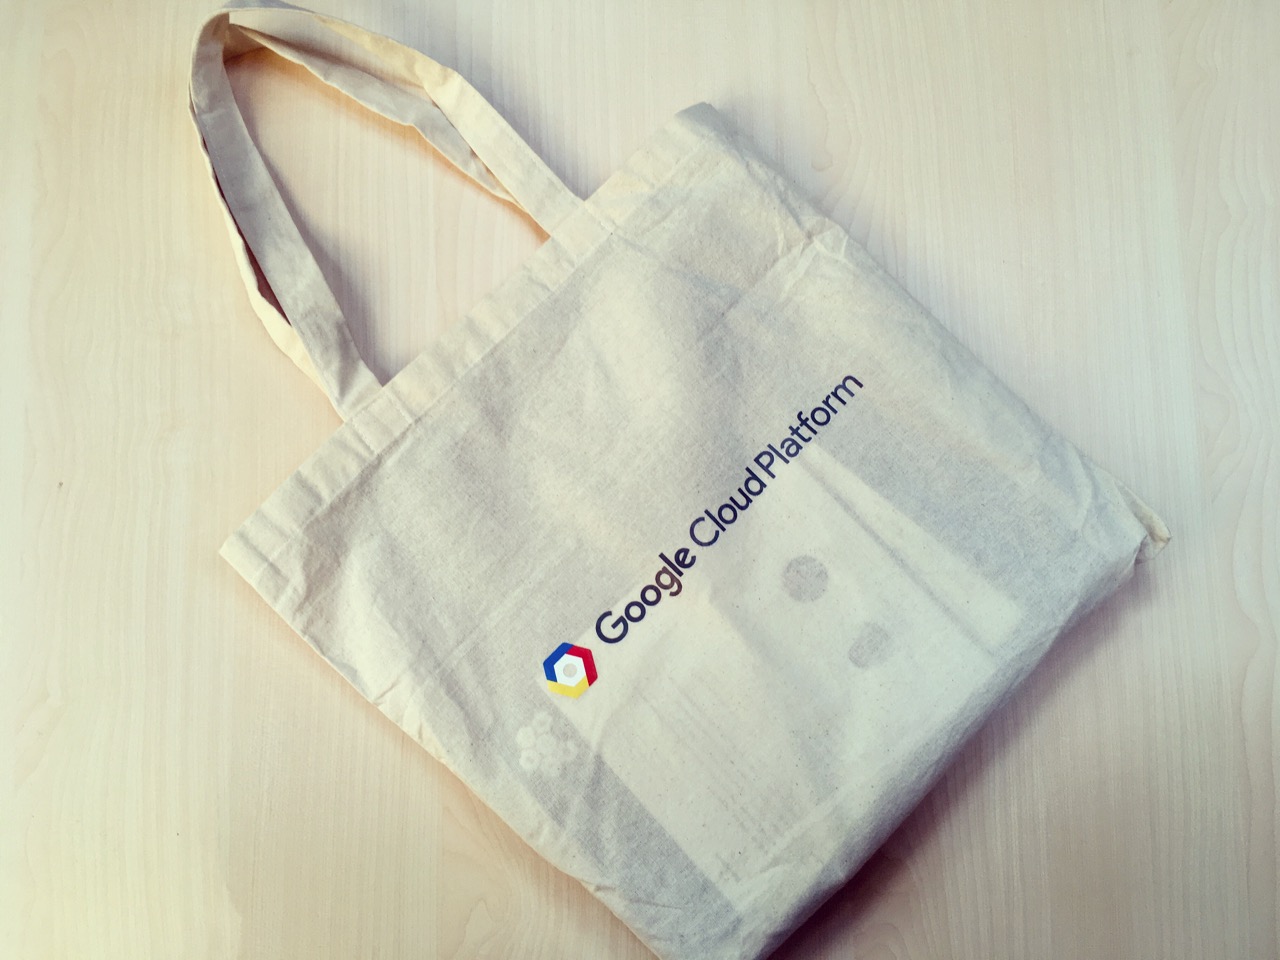 Google Cloud Platform Training Event Goodies Bag